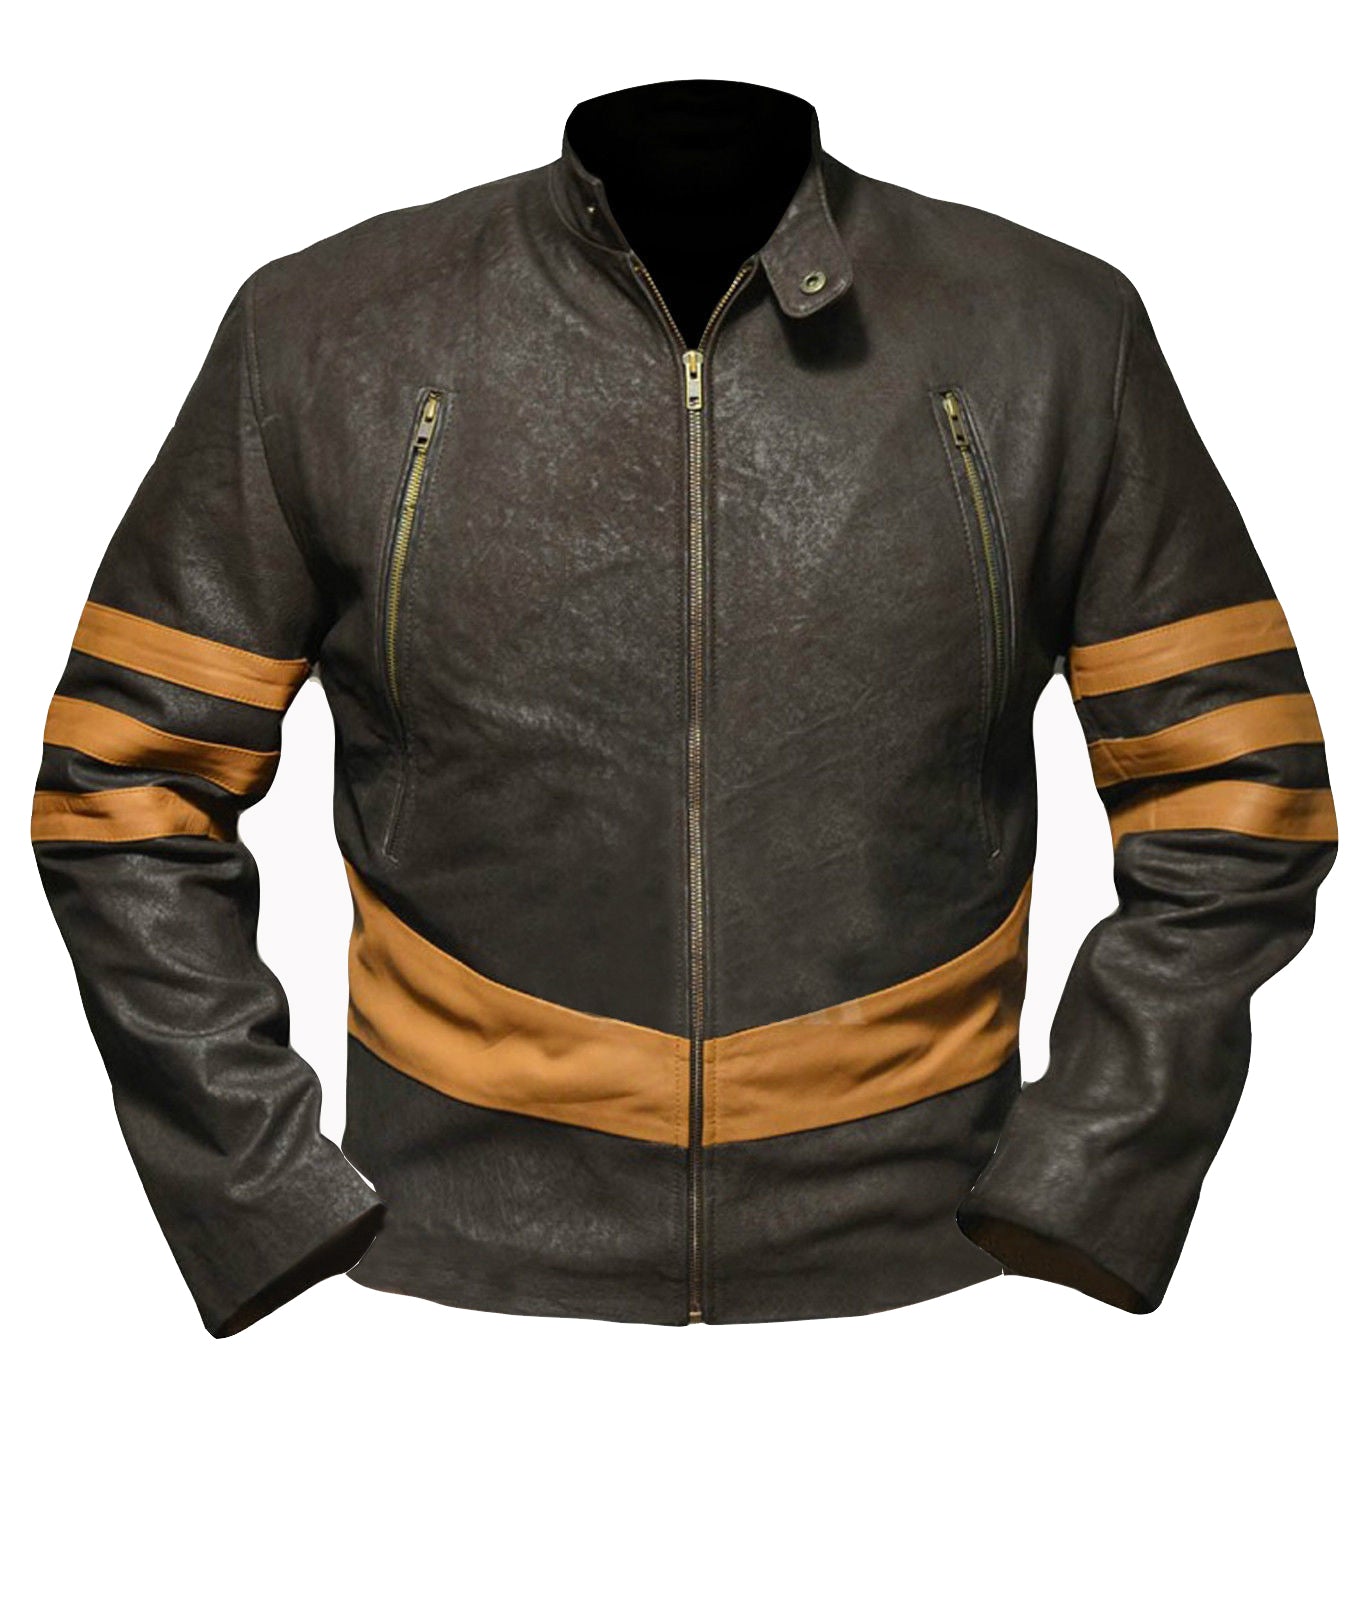 Leather Jackets Hub X-Men: Wolverine Logan Hugh Jackman Sheep Leather Jacket (Brown-Yellow, Racer Jacket) - 1501799